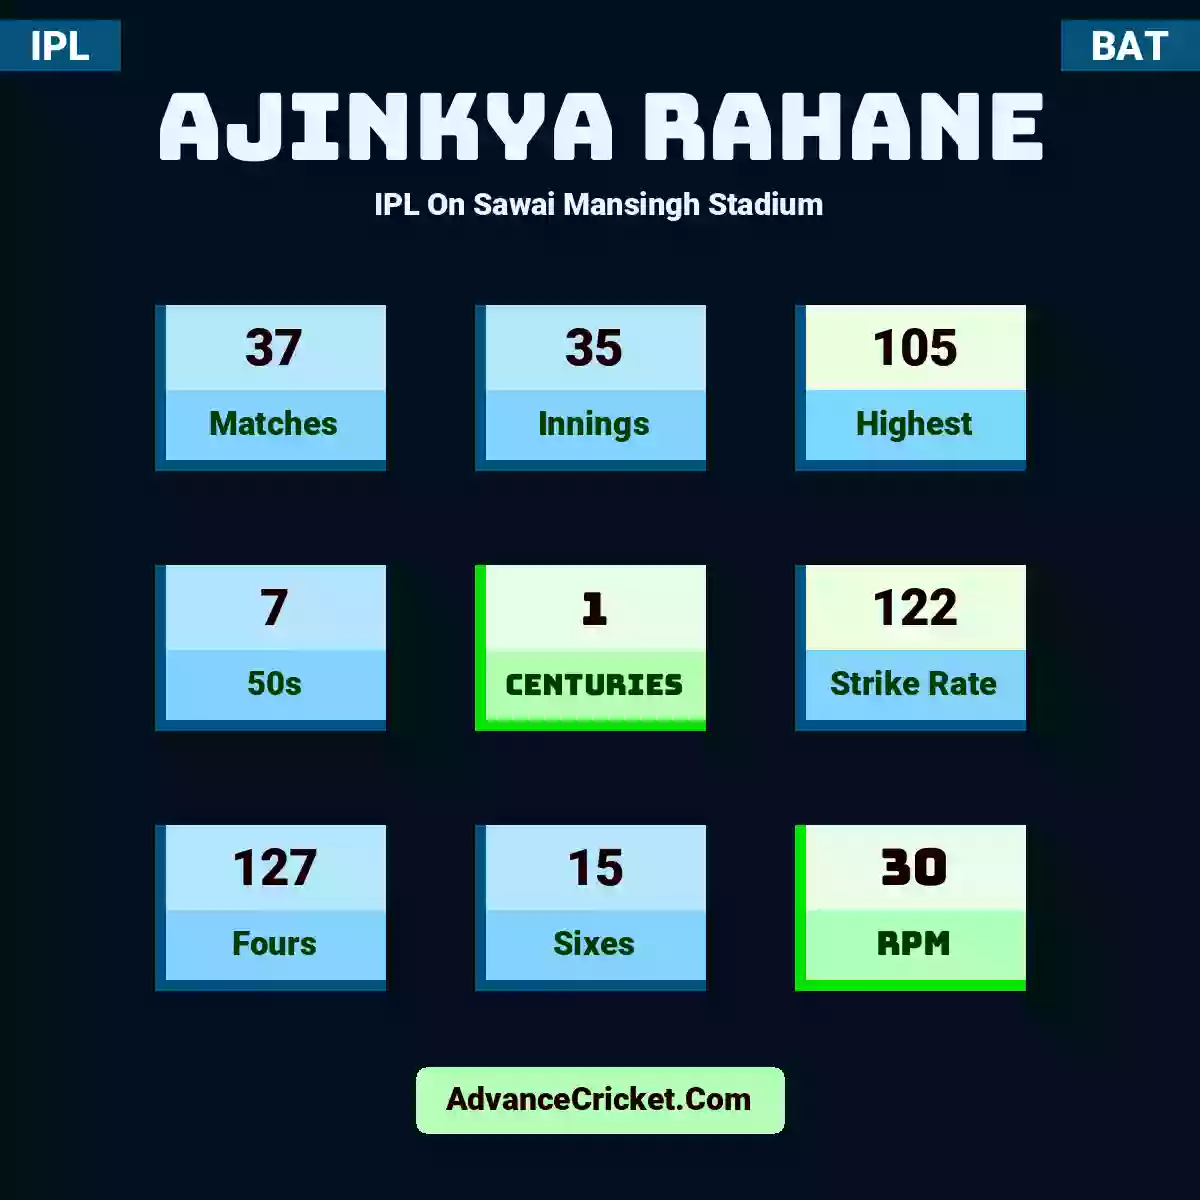 Ajinkya Rahane IPL  On Sawai Mansingh Stadium, Ajinkya Rahane played 37 matches, scored 105 runs as highest, 7 half-centuries, and 1 centuries, with a strike rate of 122. A.Rahane hit 127 fours and 15 sixes, with an RPM of 30.